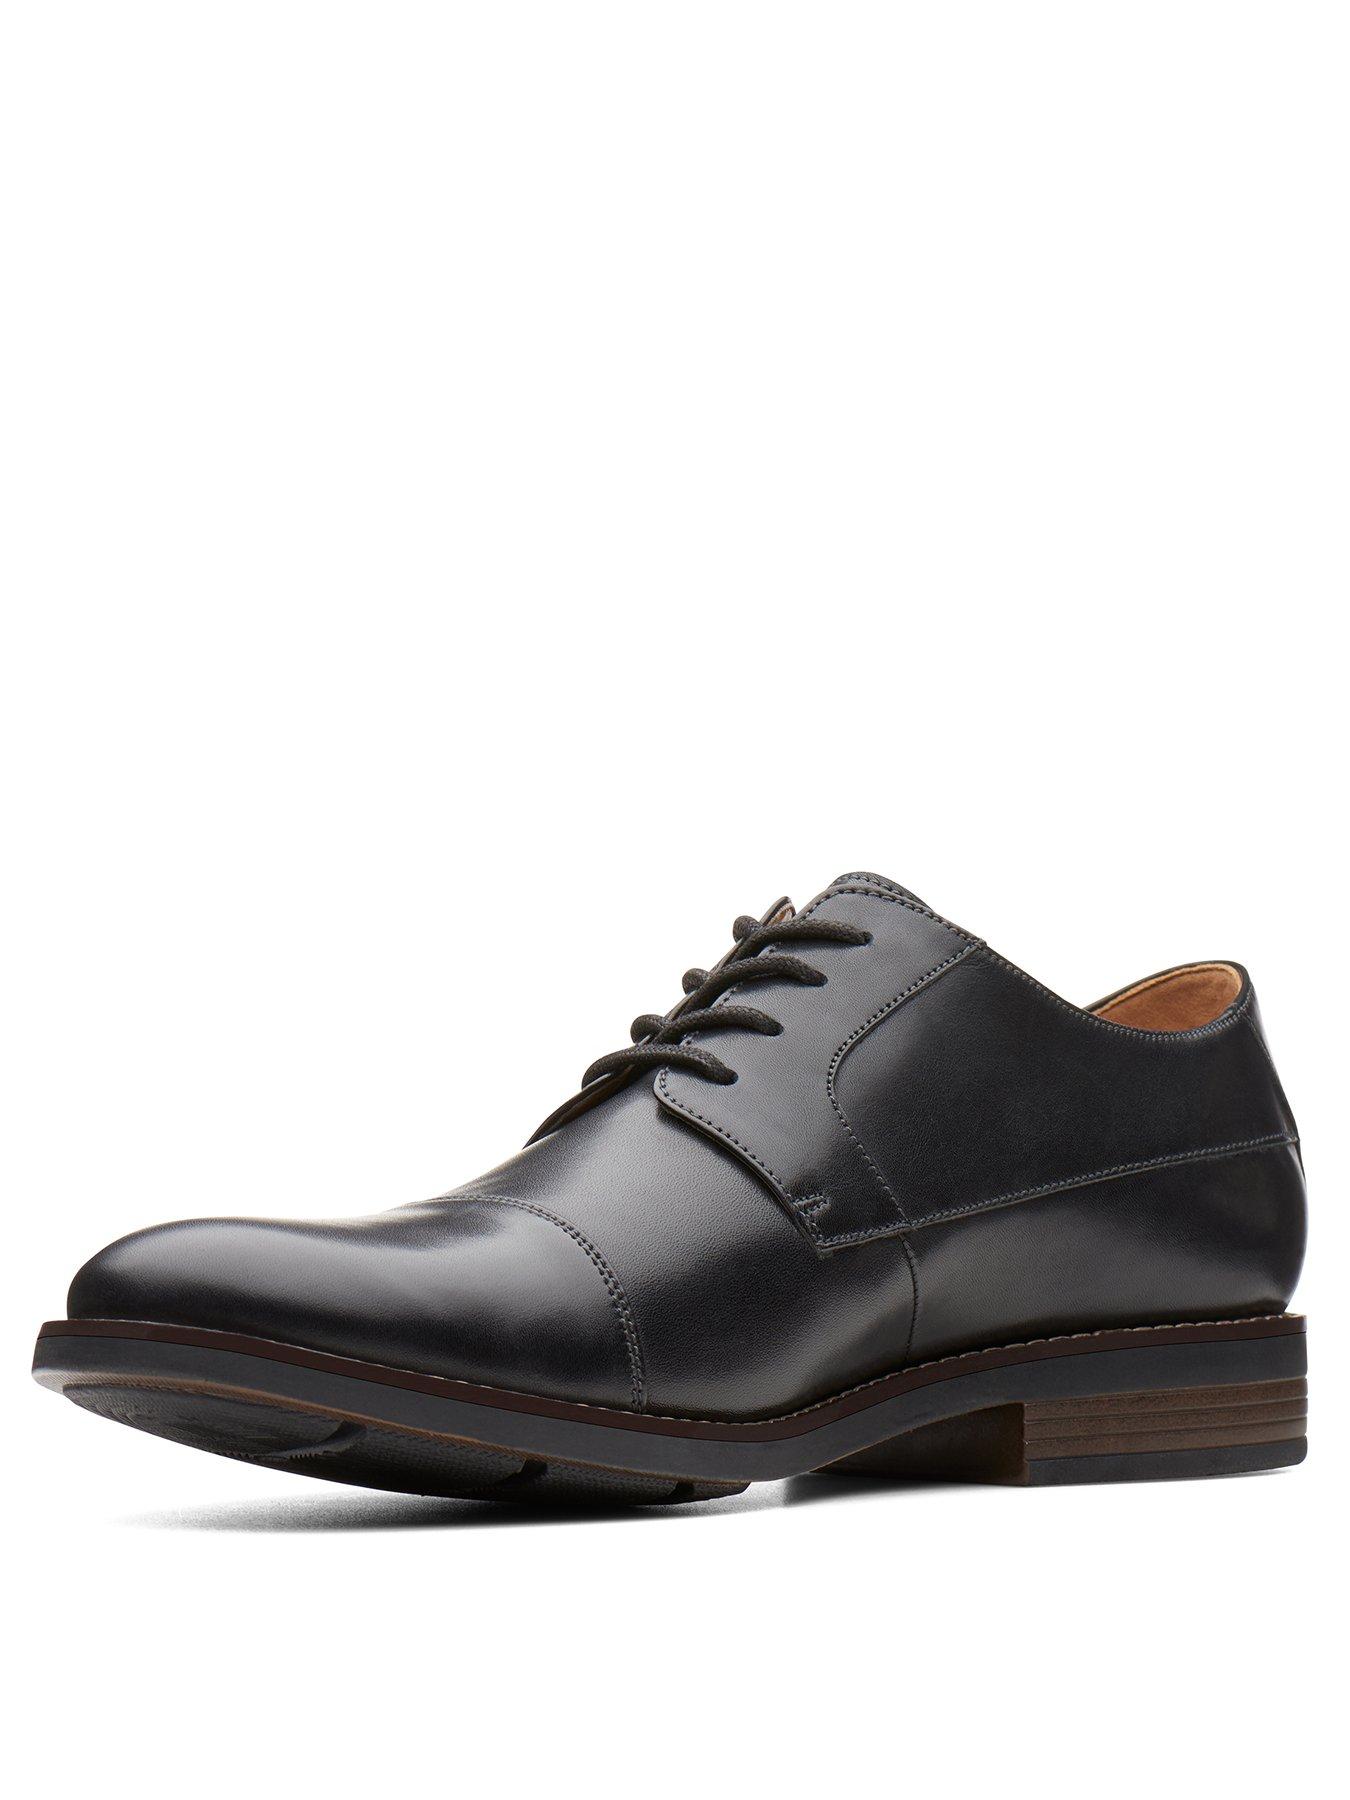 Shoes & boots Becken Cap Leather Lace Up Shoe - Black